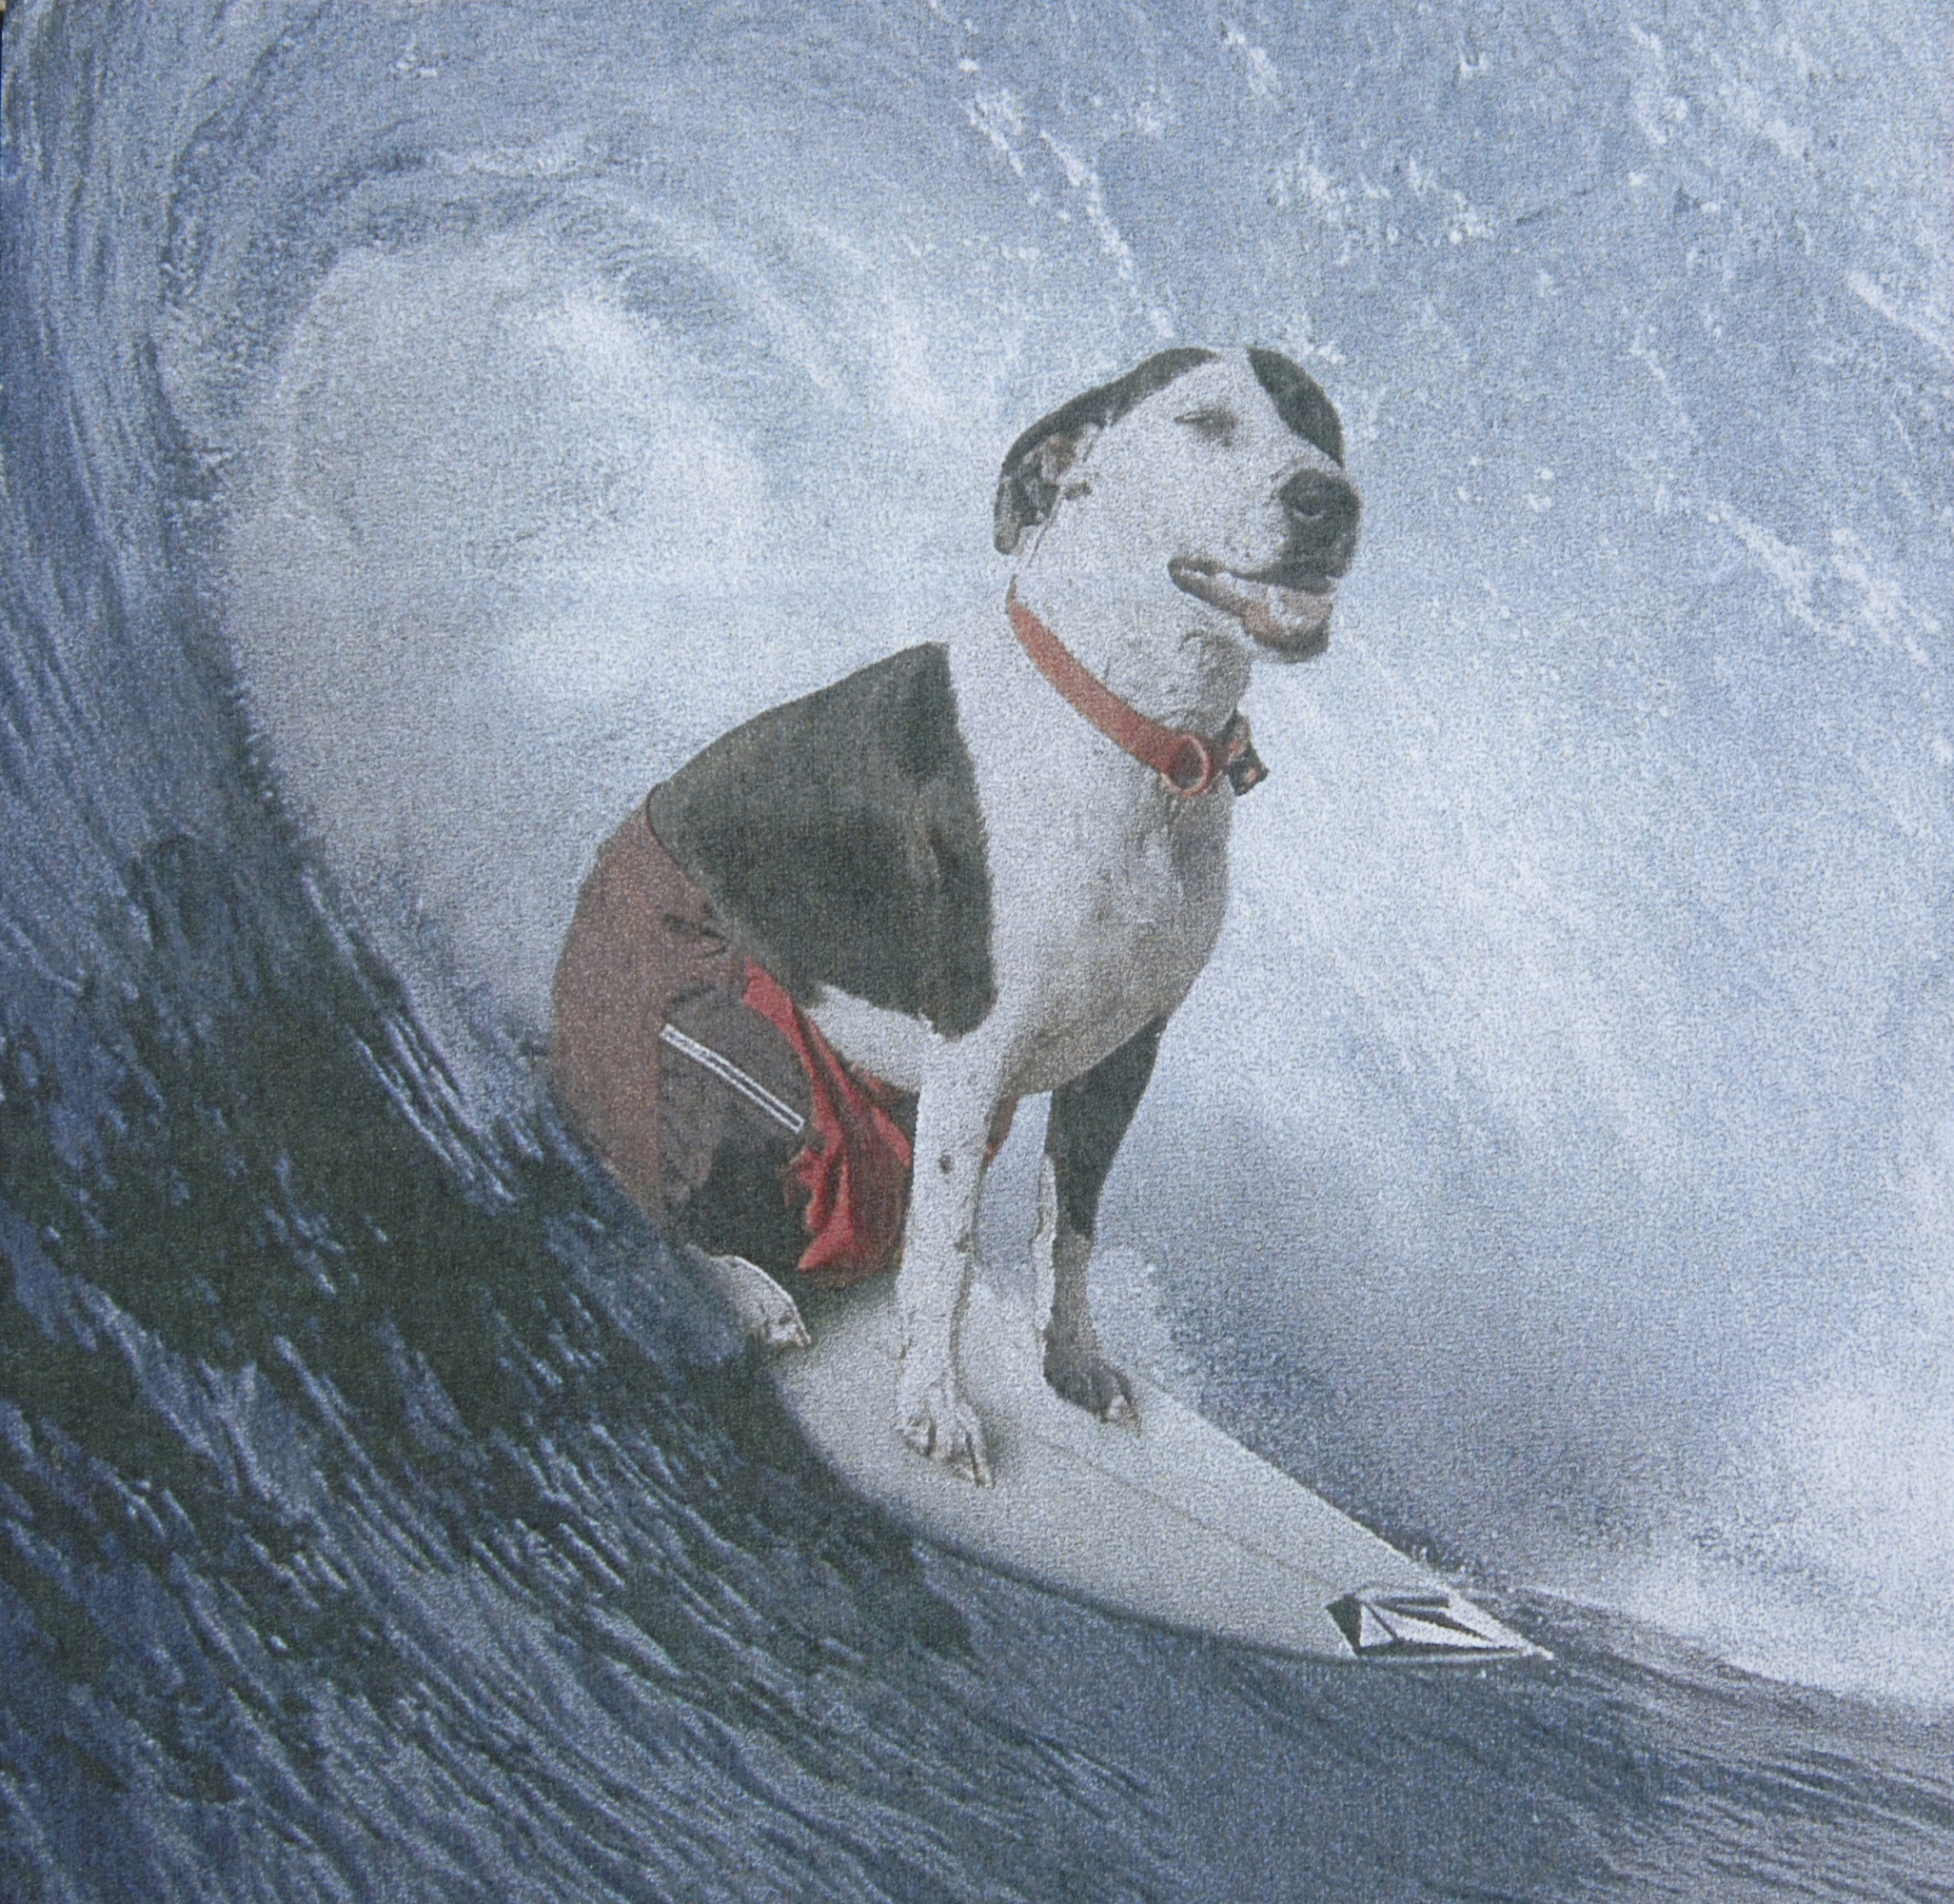 dog surfing Rosemoor at Woodbury Irvine, California